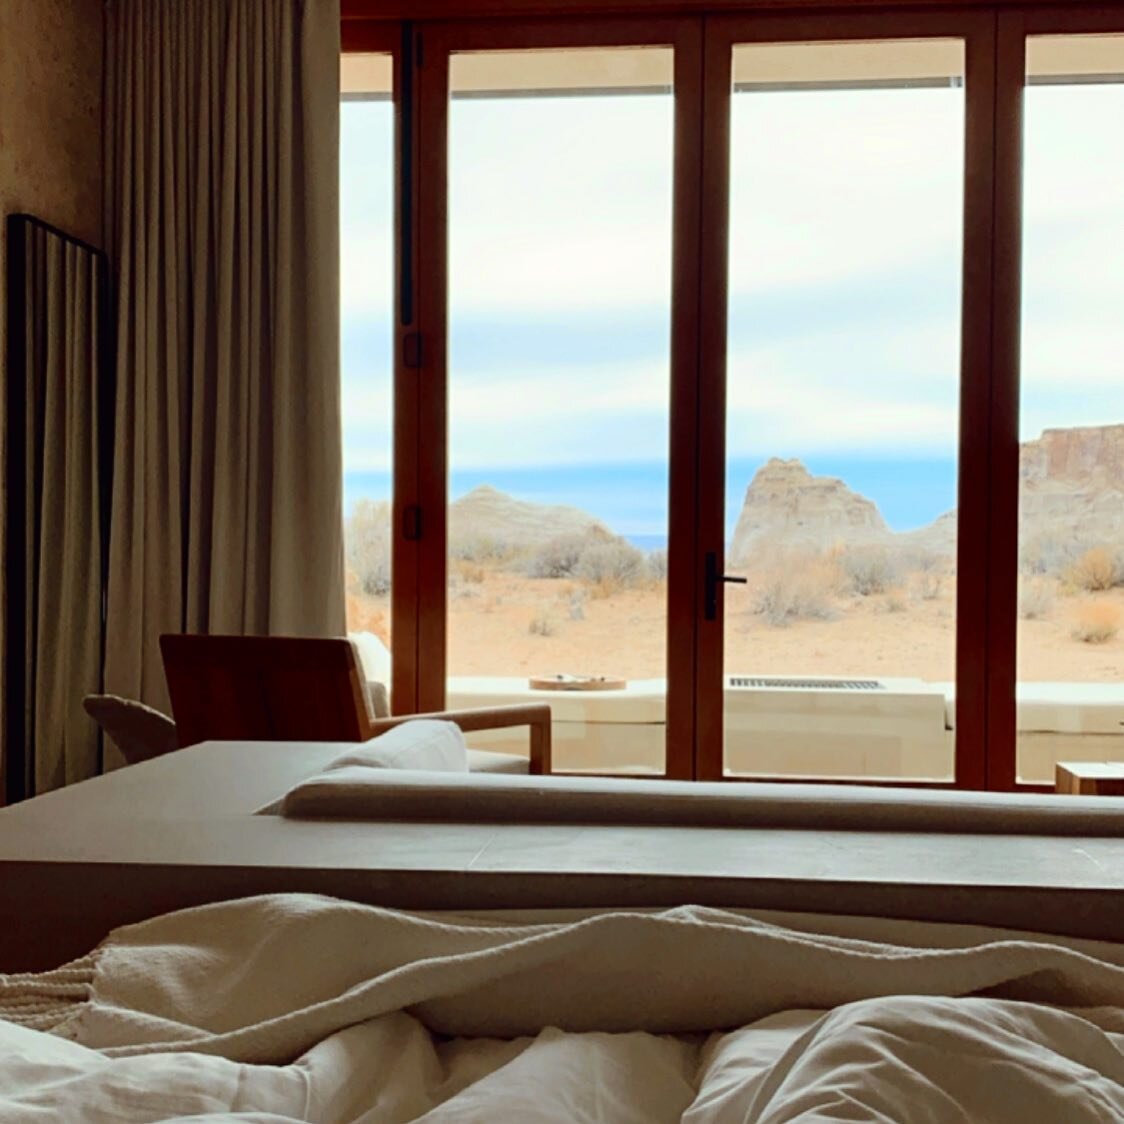 Perfect room
Dreamy views
@amangiri